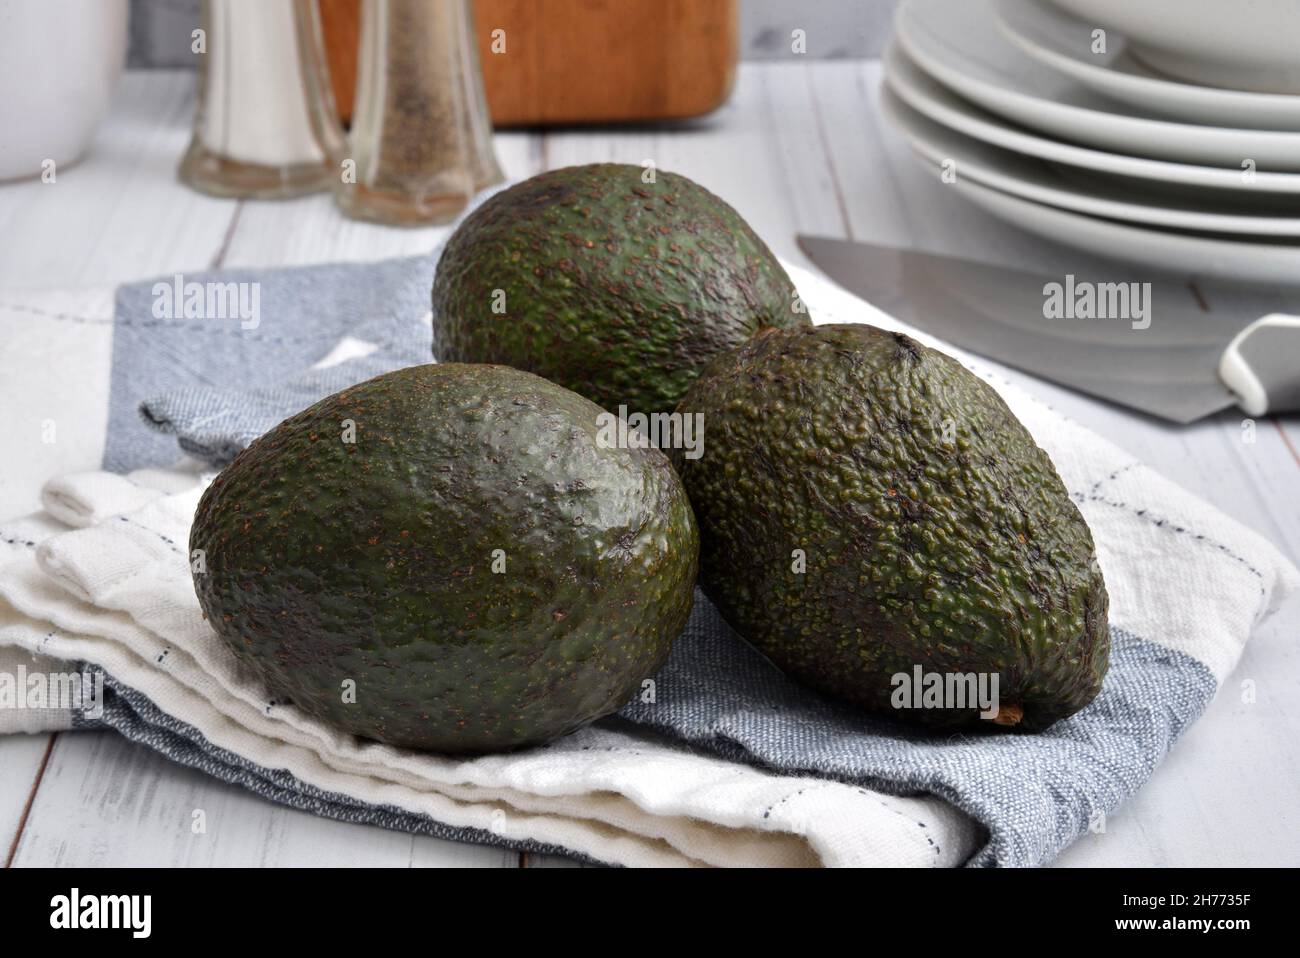 Fresh ripe organic avocado on a kitchen towel close up Stock Photo